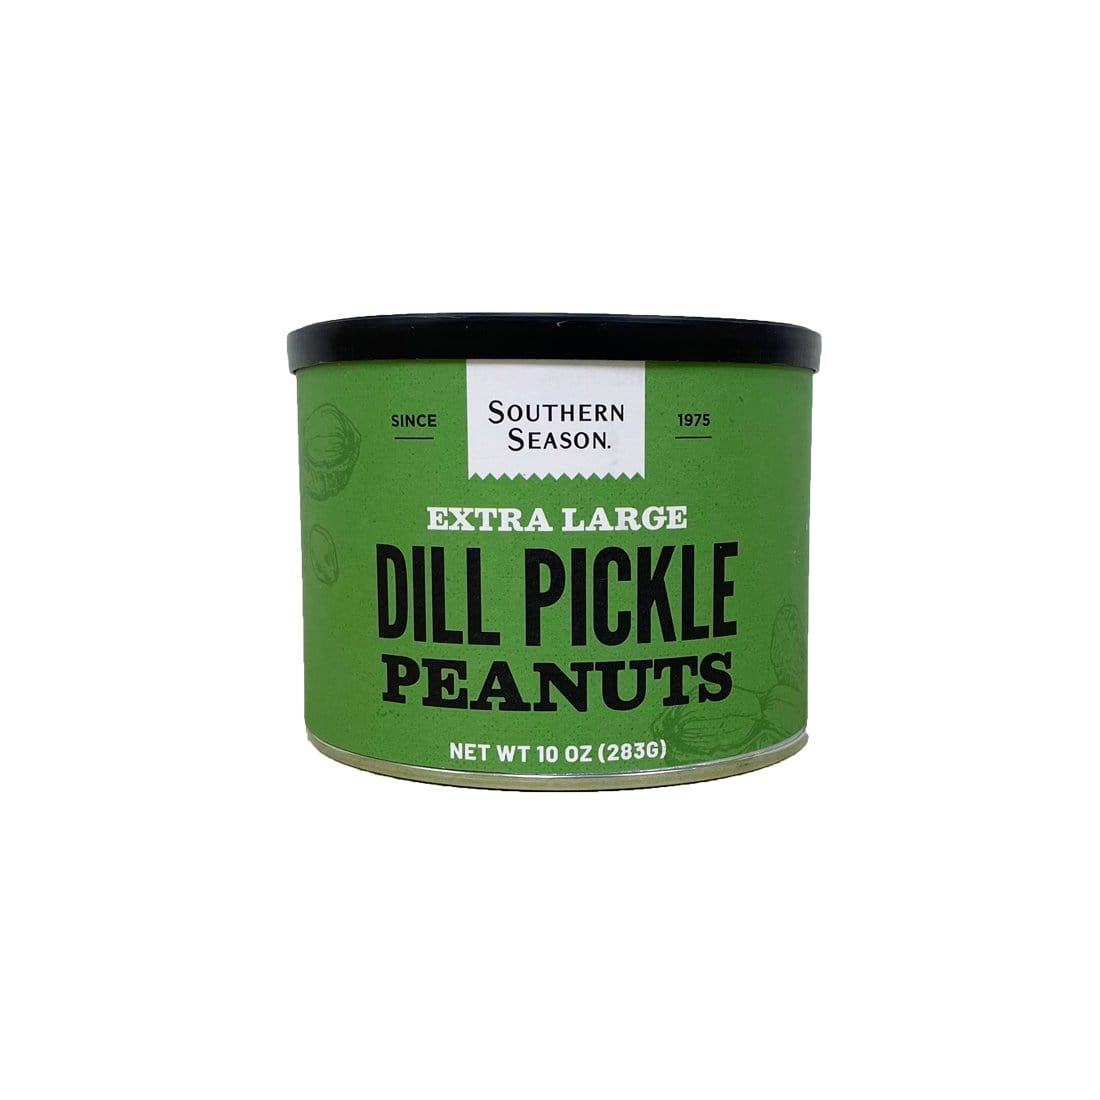 Southern Season Nuts Southern Season Dill Pickle Peanuts 10 oz